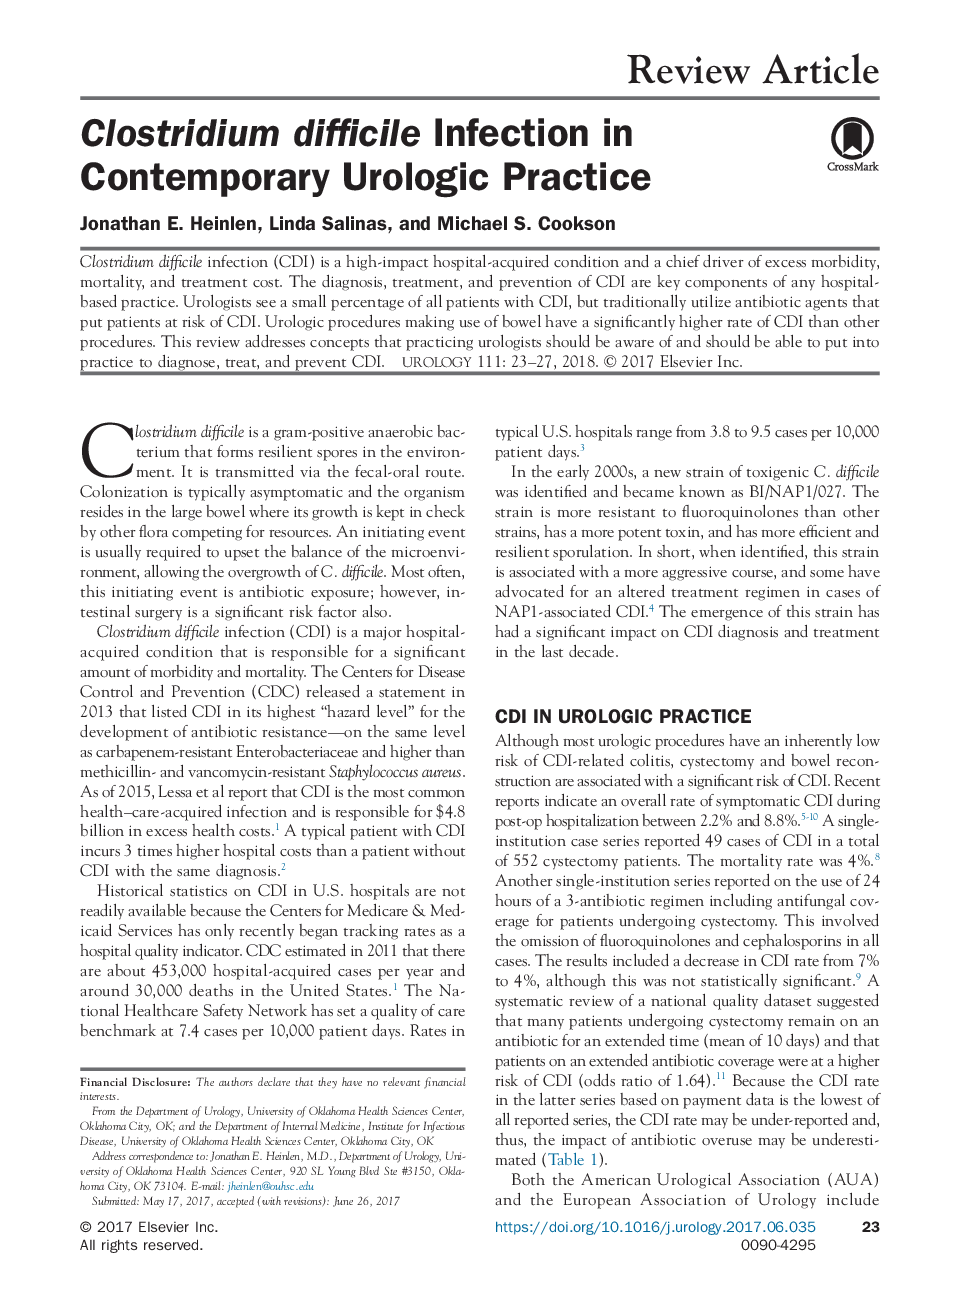 Clostridium difficile Infection in Contemporary Urologic Practice